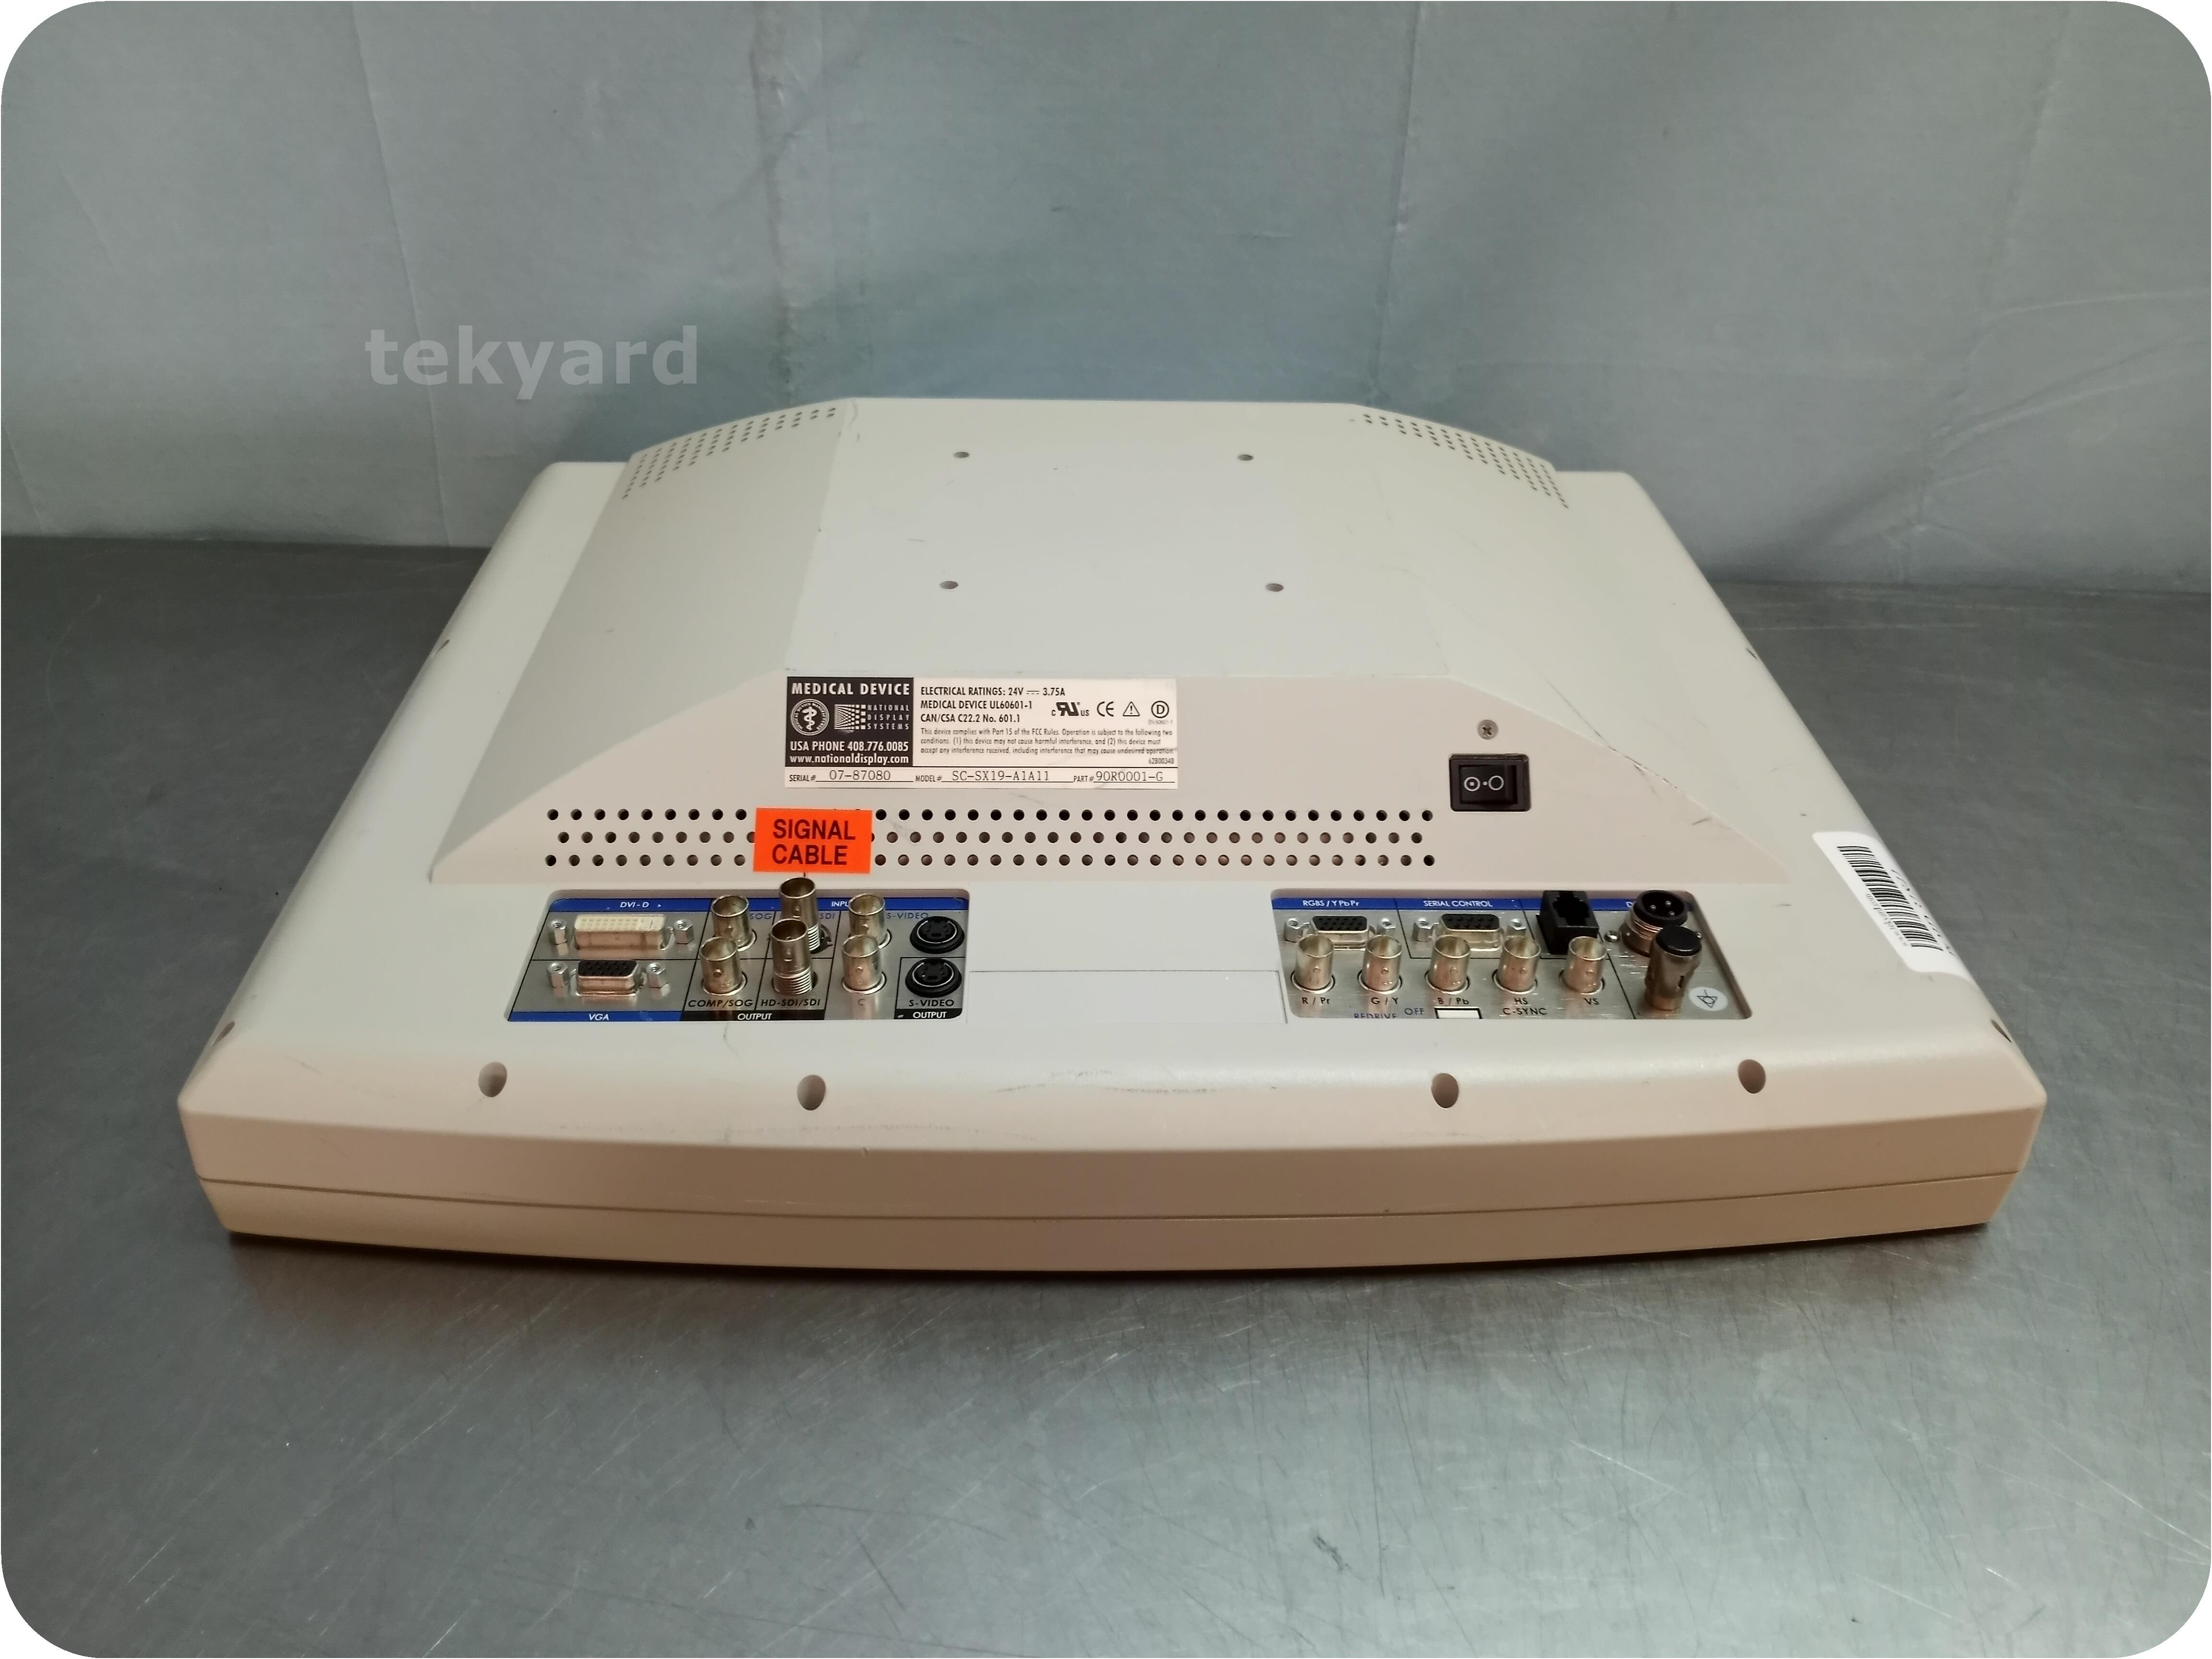 tekyard, LLC. - 272910-National Display System NDS SC-SX19-A1A11 